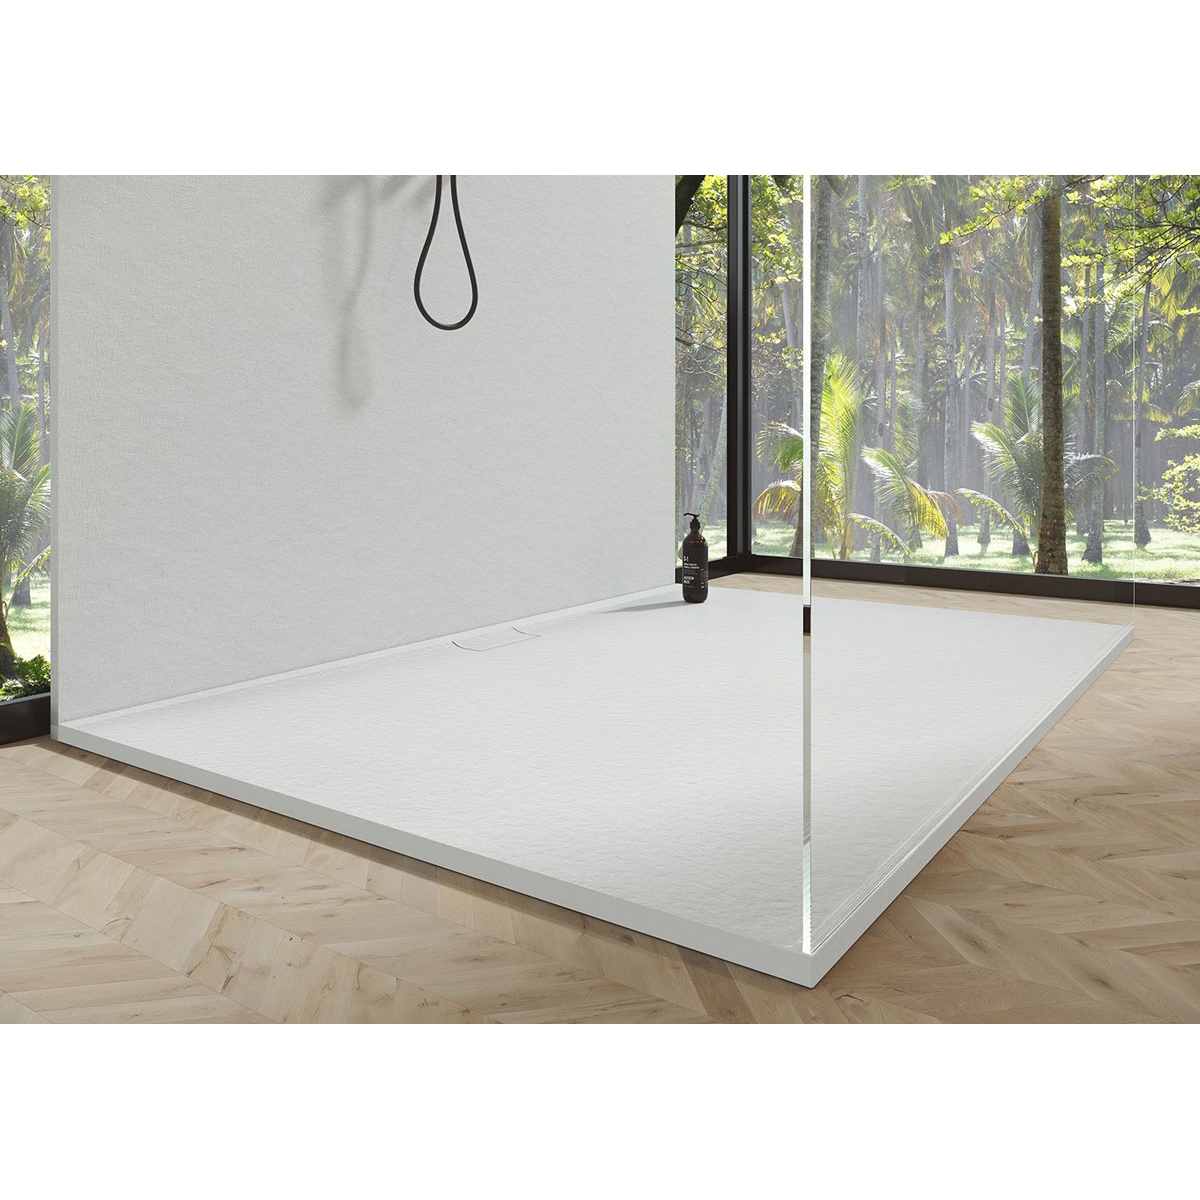 McBath - Plato de Ducha de Resina de 100 x 80 cm - Plato de ducha rectangular 100x80 Nova Stone Cover Blanco